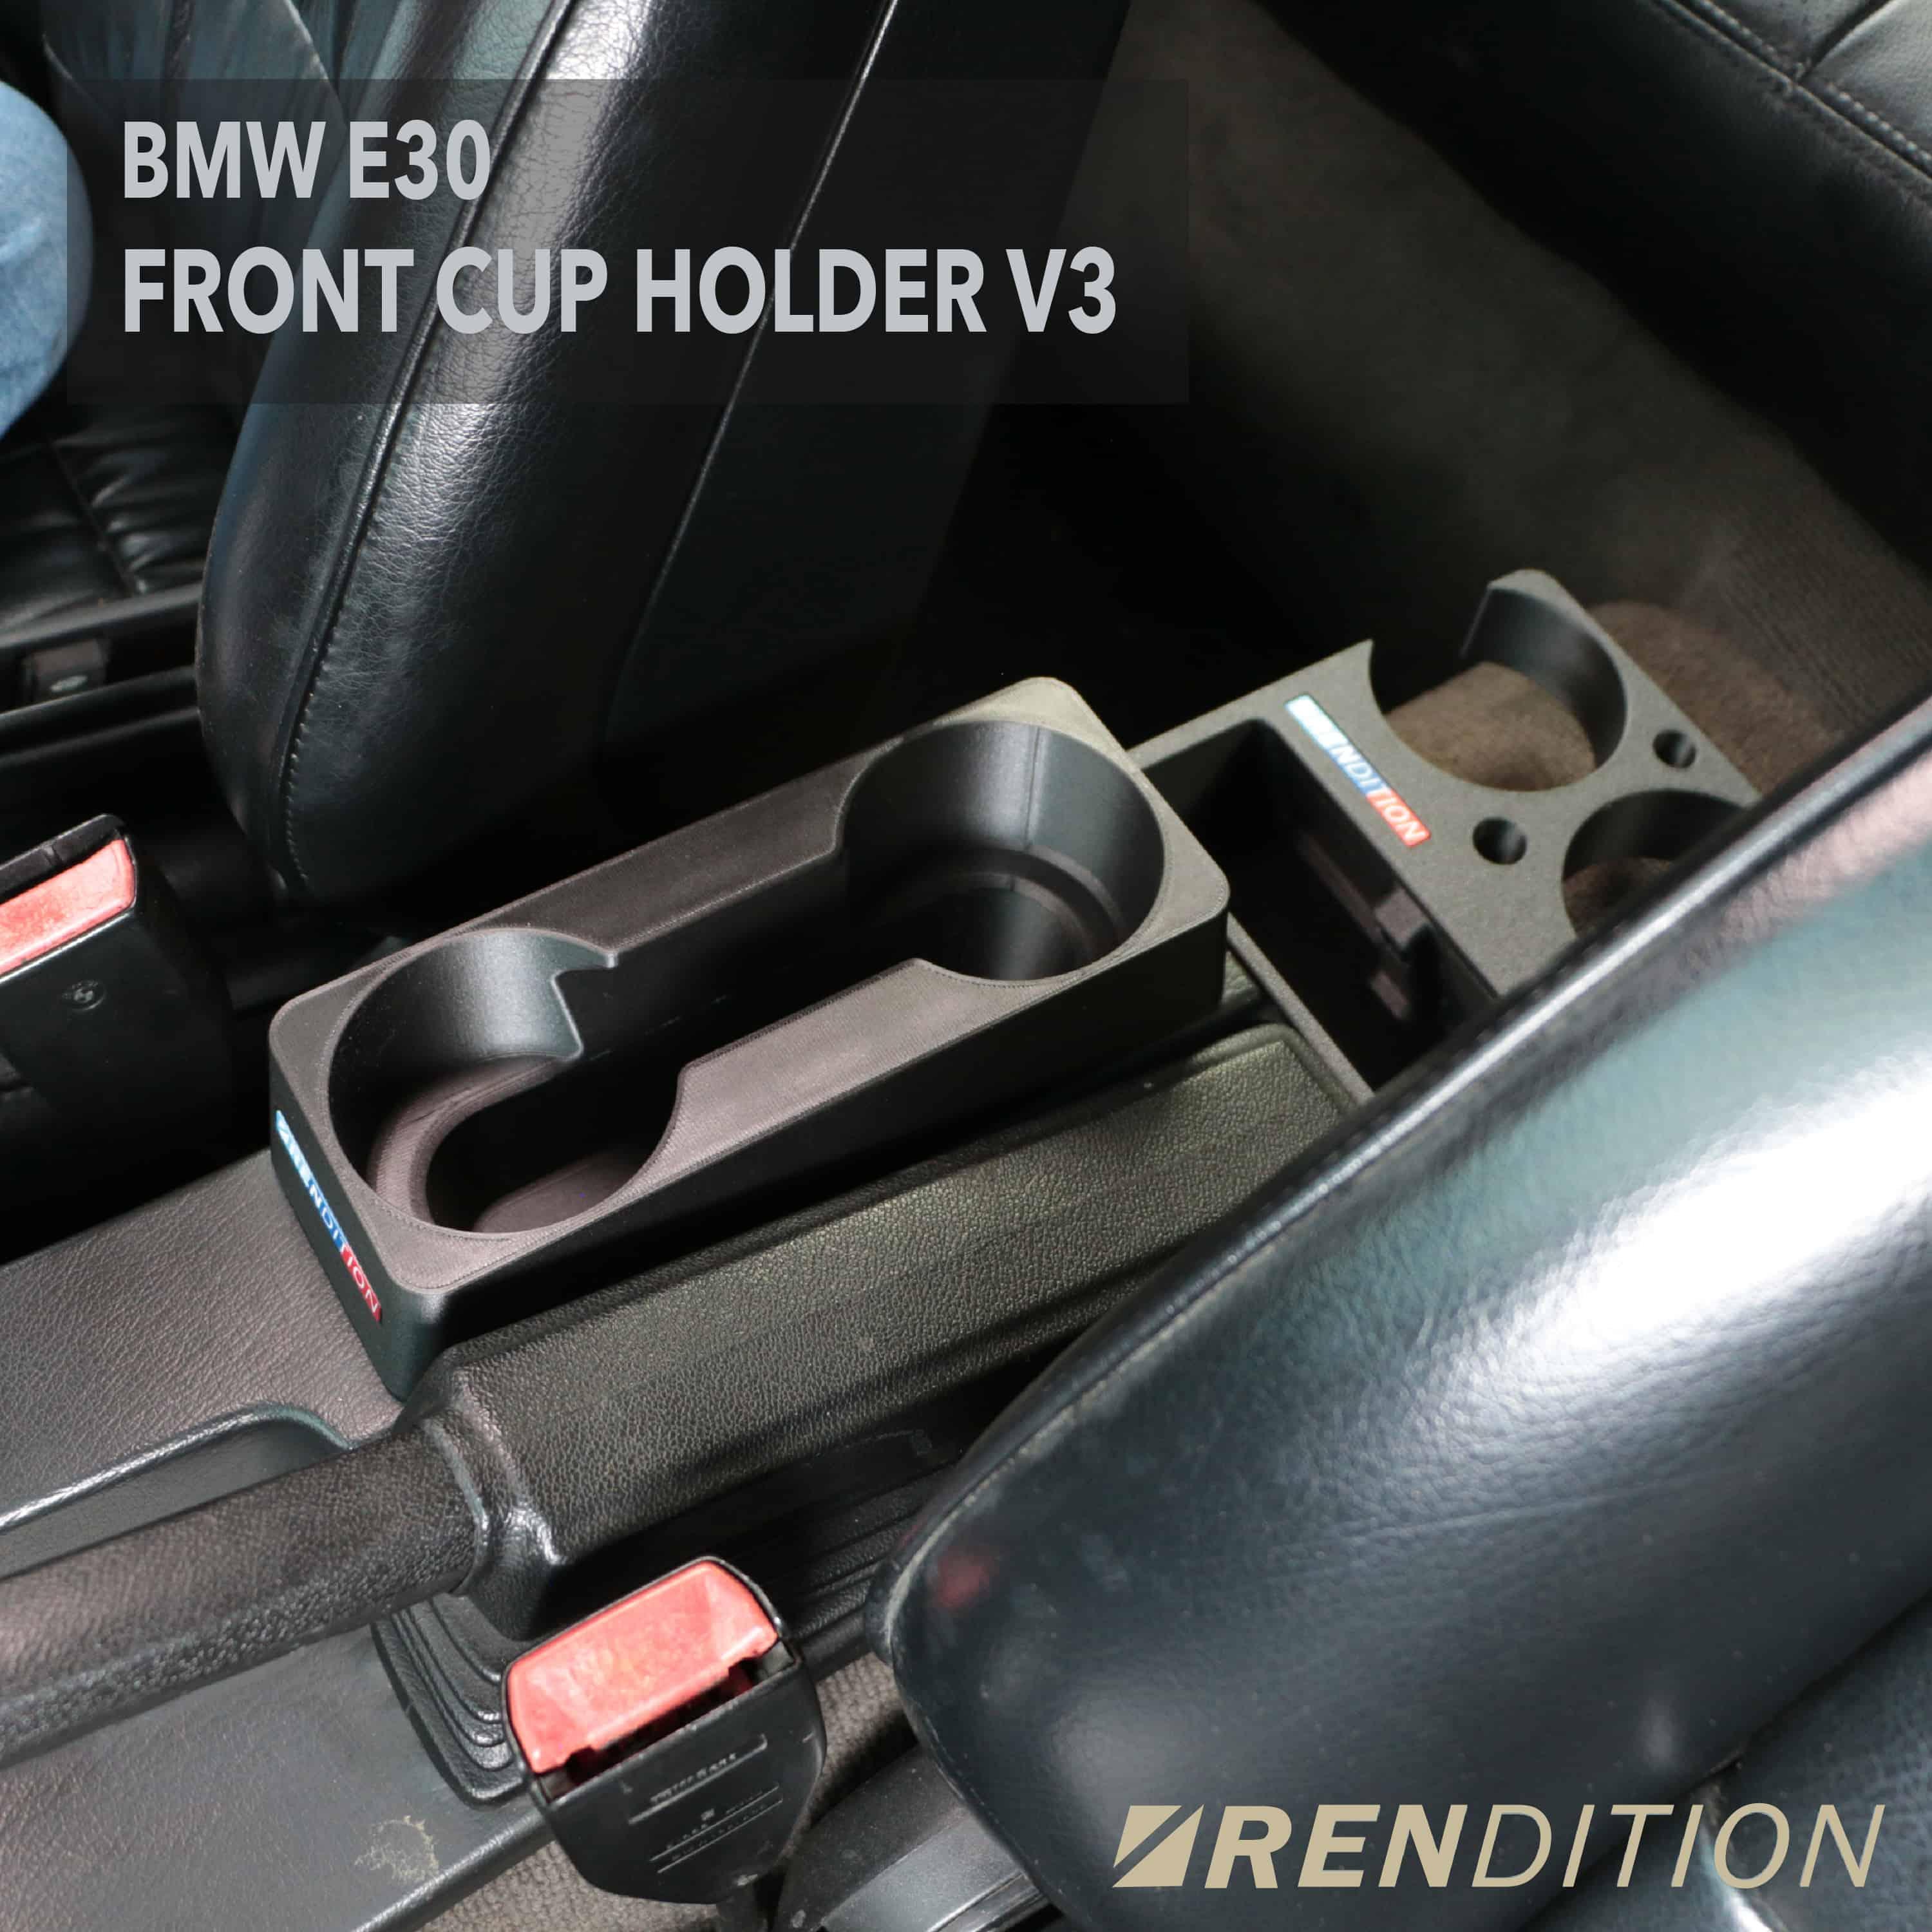 BMW E30 FRONT CUP HOLDER V3 - K2 Industries